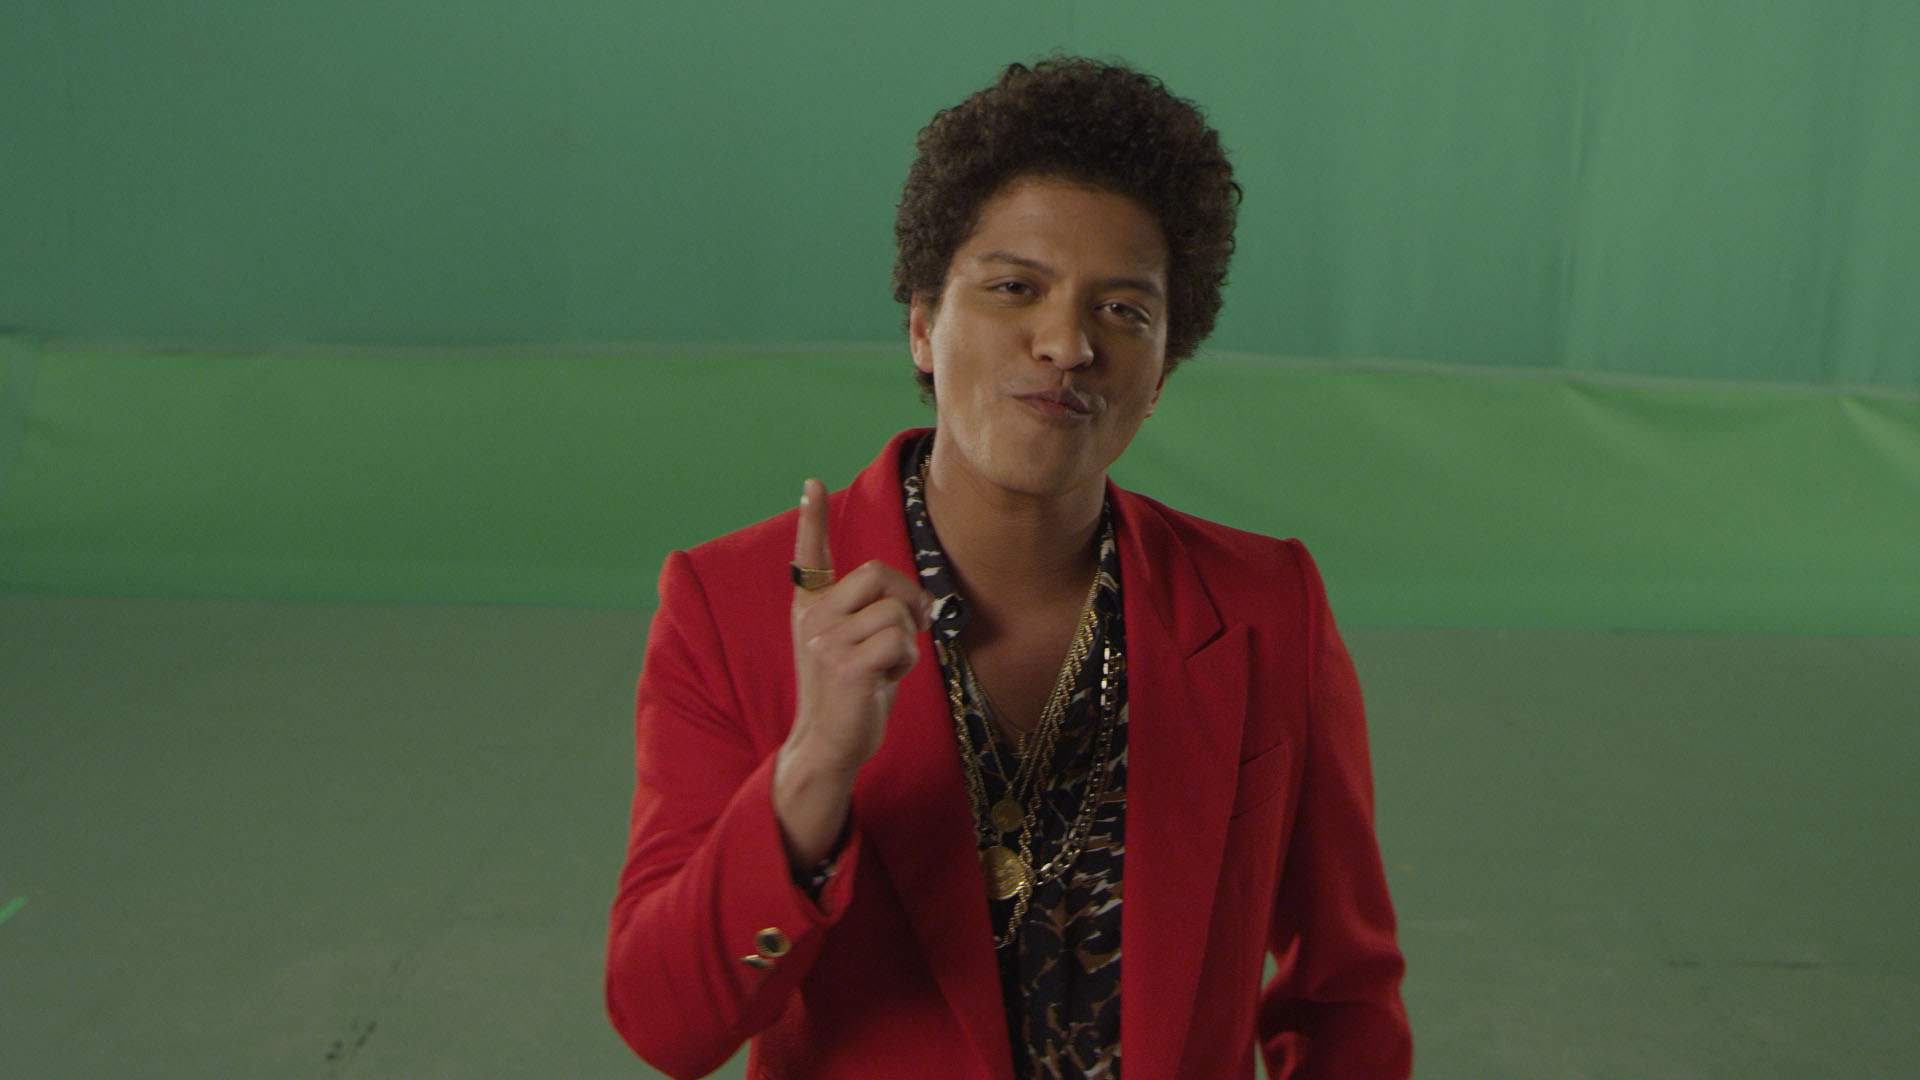 Bruno Mars “Treasure” Music Video